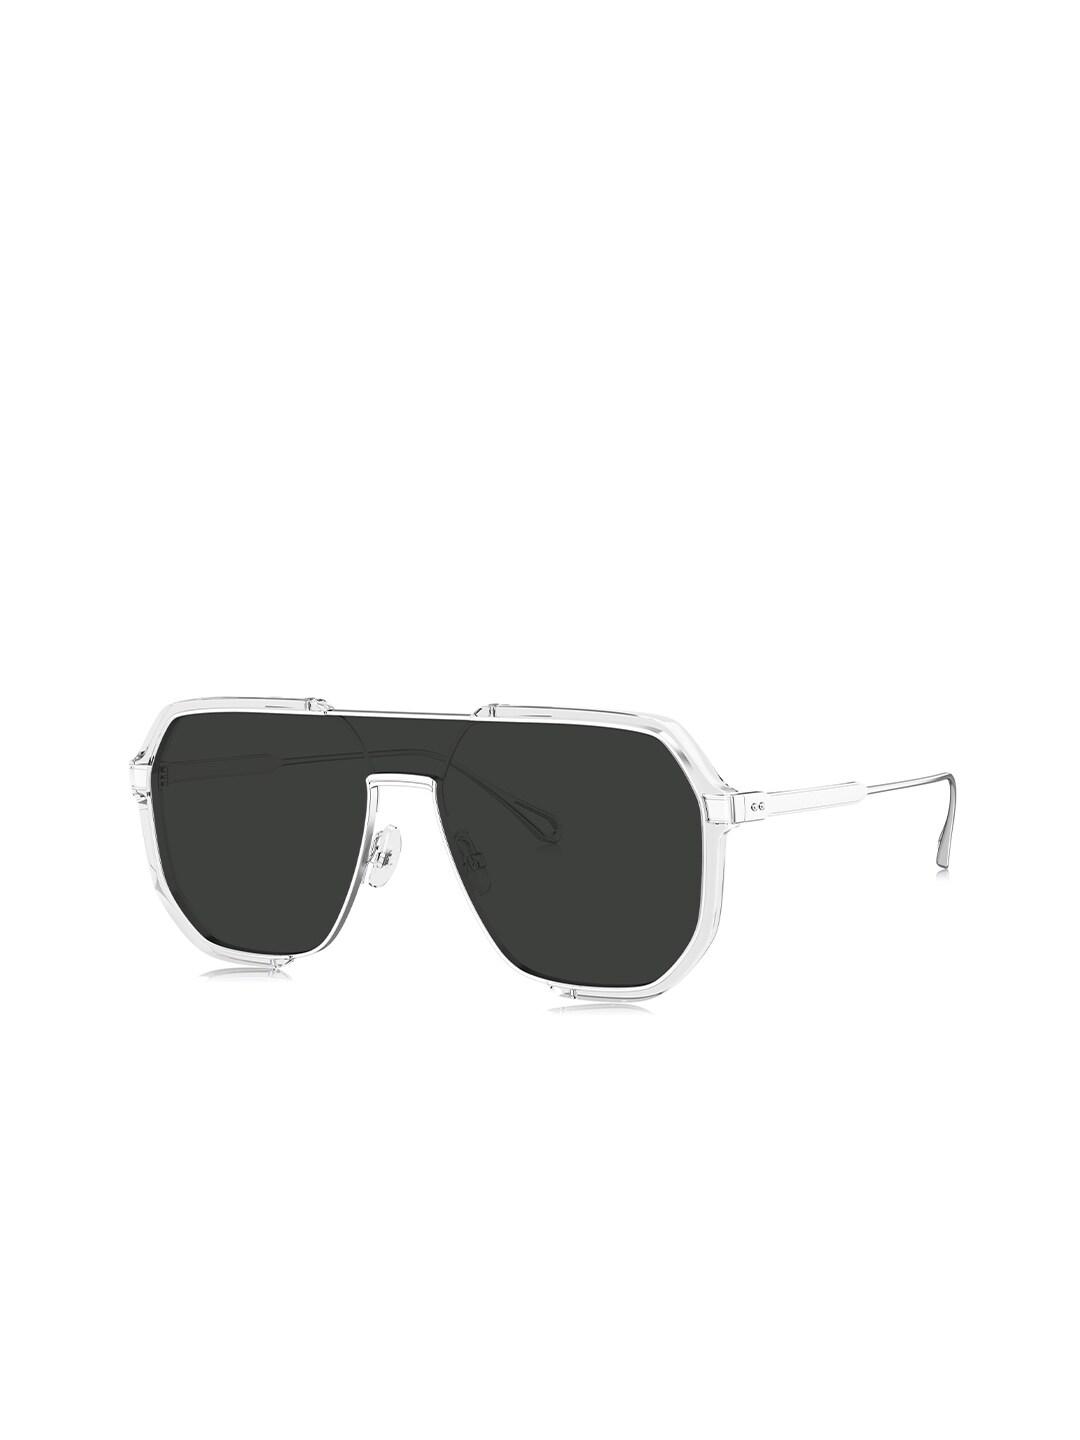 BOLON EYEWEAR Men Grey Lens & Silver-Toned Aviator Sunglasses with UV Protected Lens